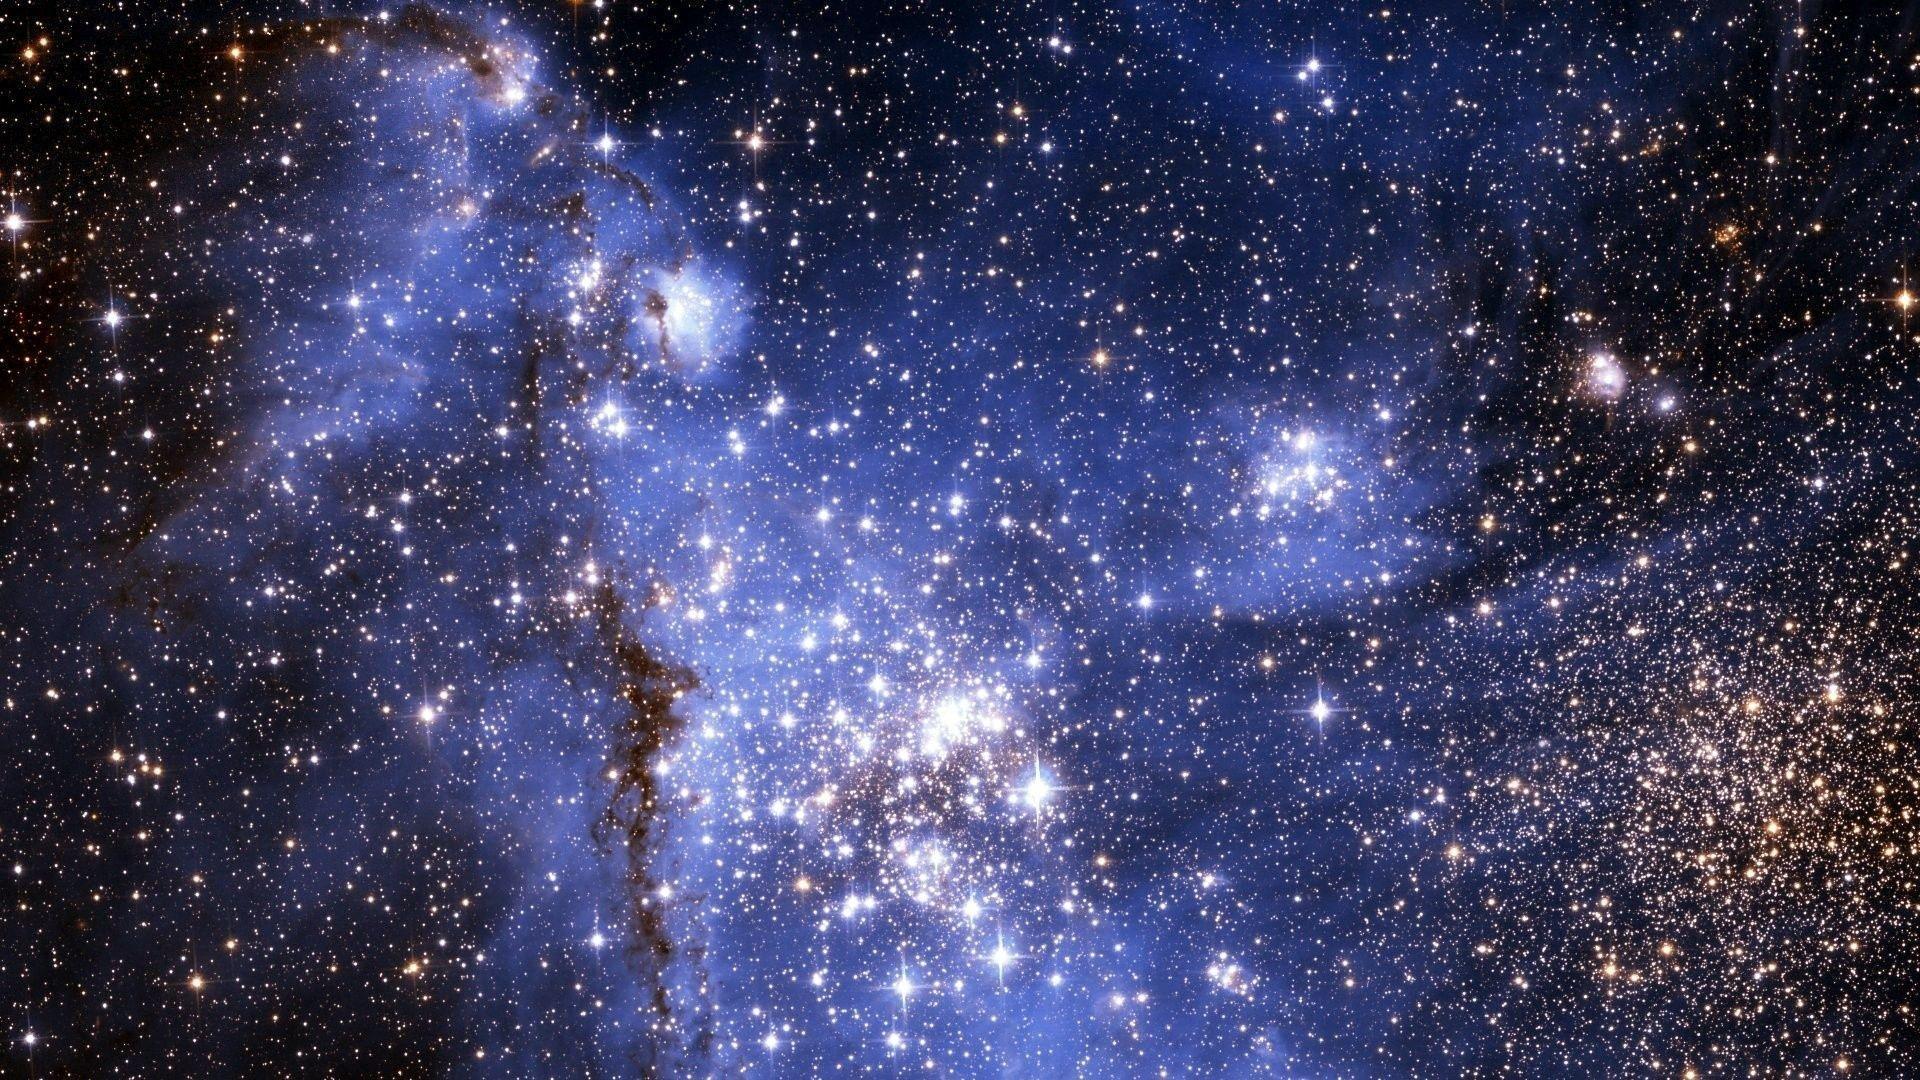 Hd Wallpaper Space Stars 1920x1080PX Amazing Stars Space